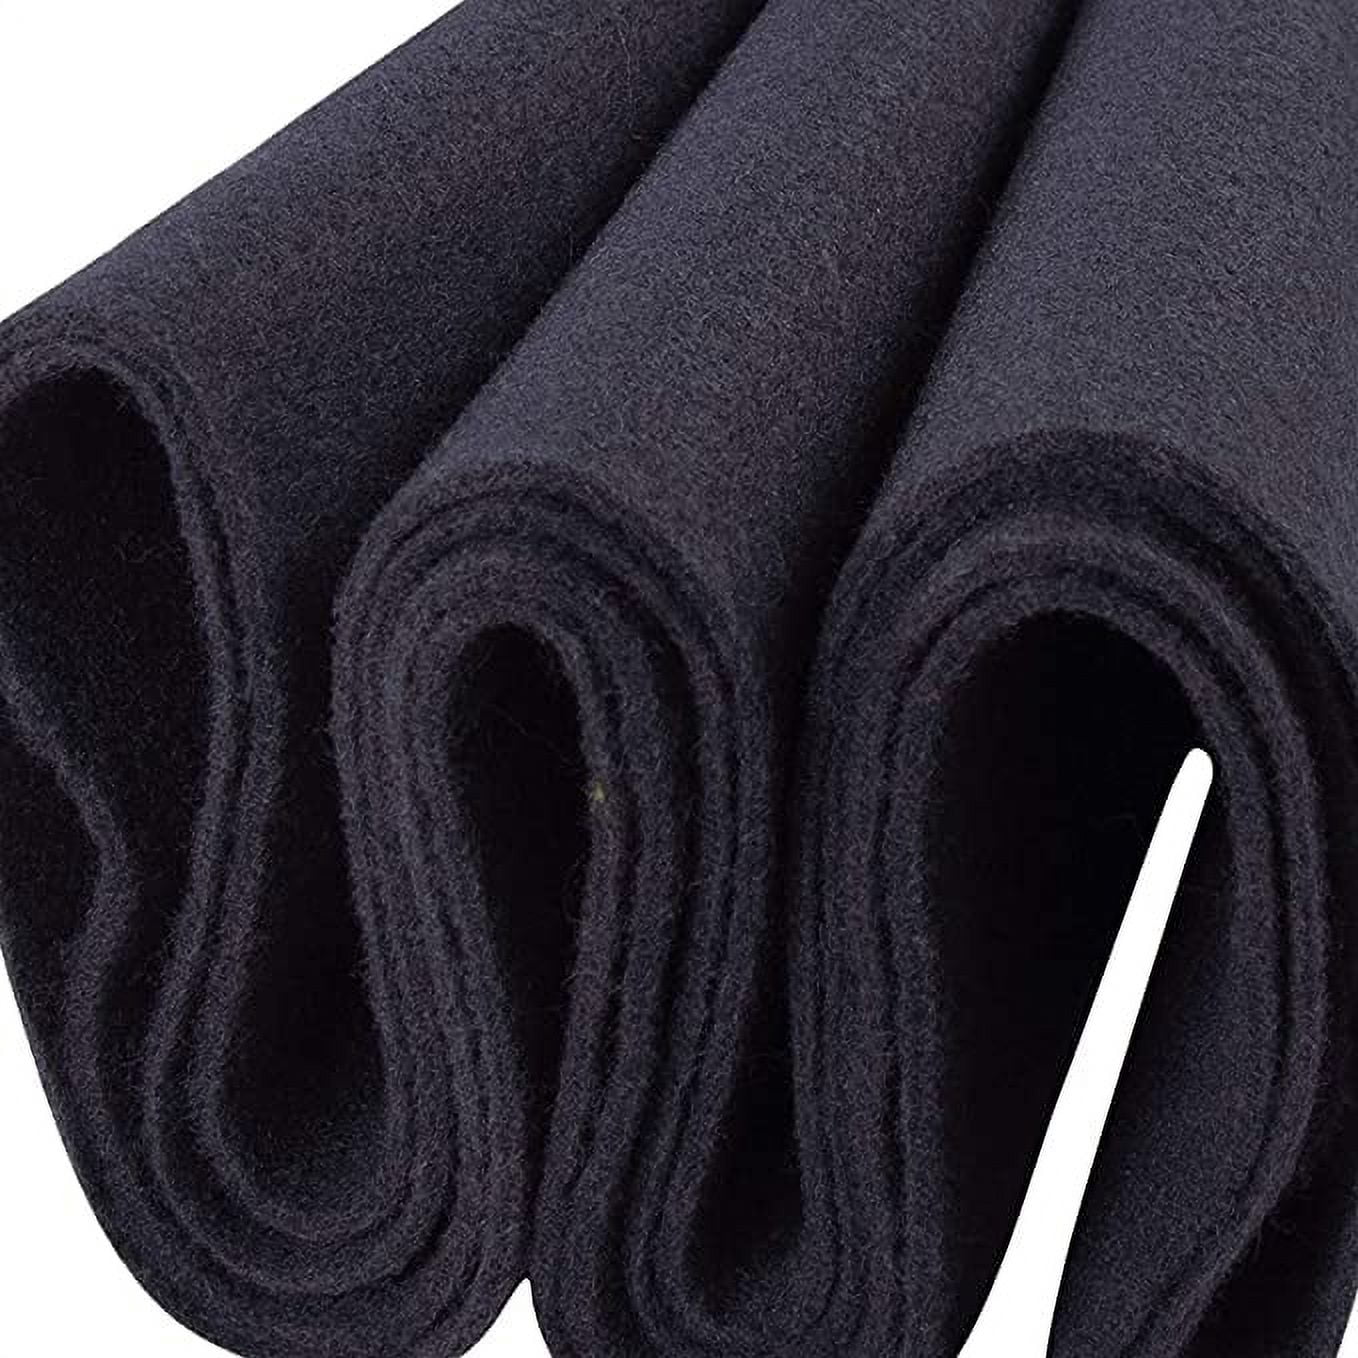 Eppingwin 60 Pcs Black Felt, 4x4 Felt Sheets,Soft Felt for Crafts, Felt Fabric Sheets for DIY Patchwork